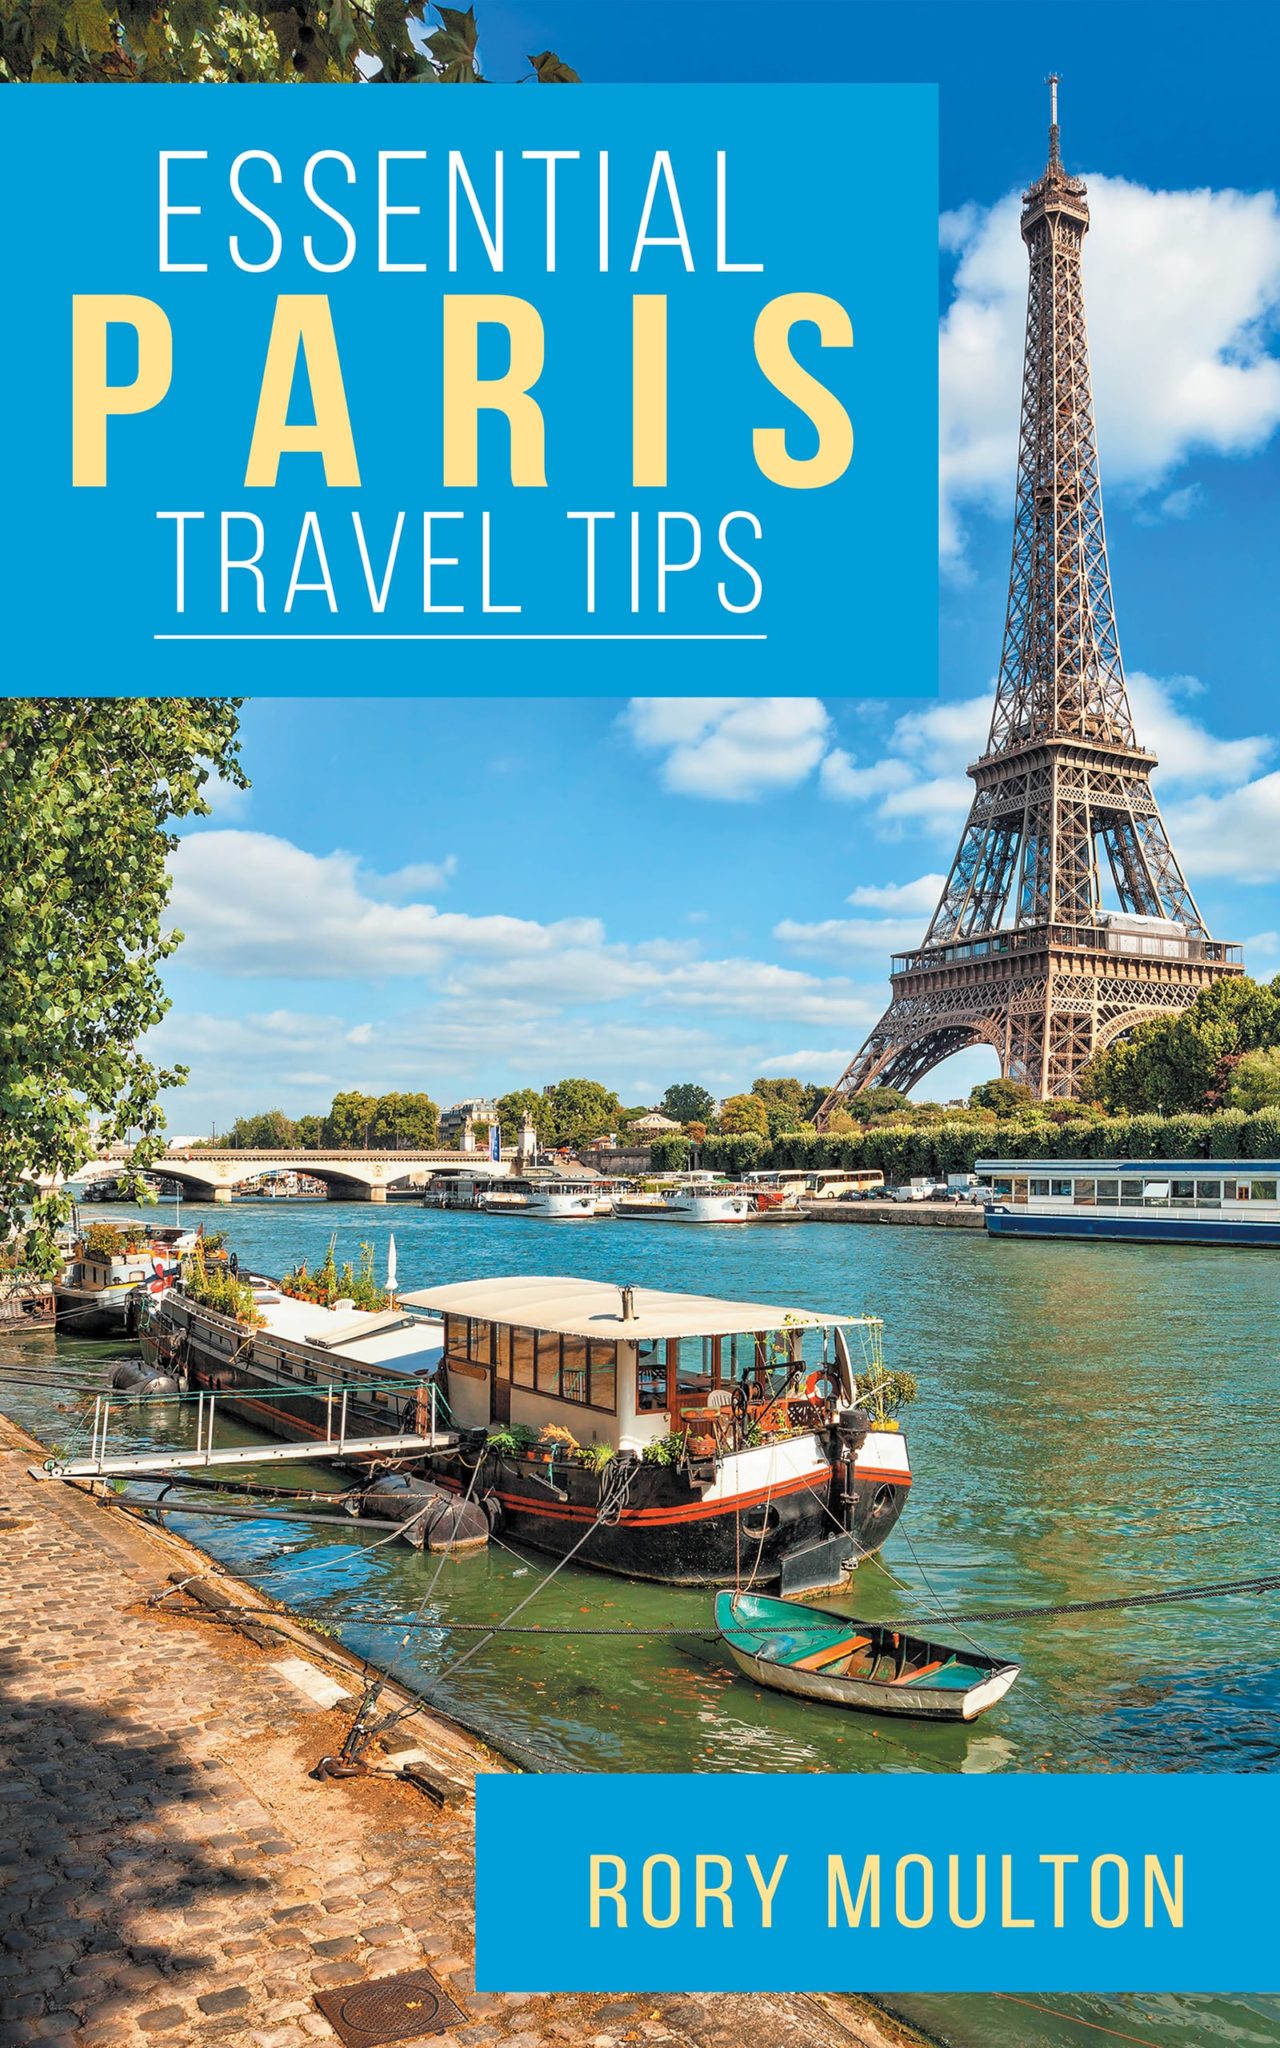 trip to paris guide